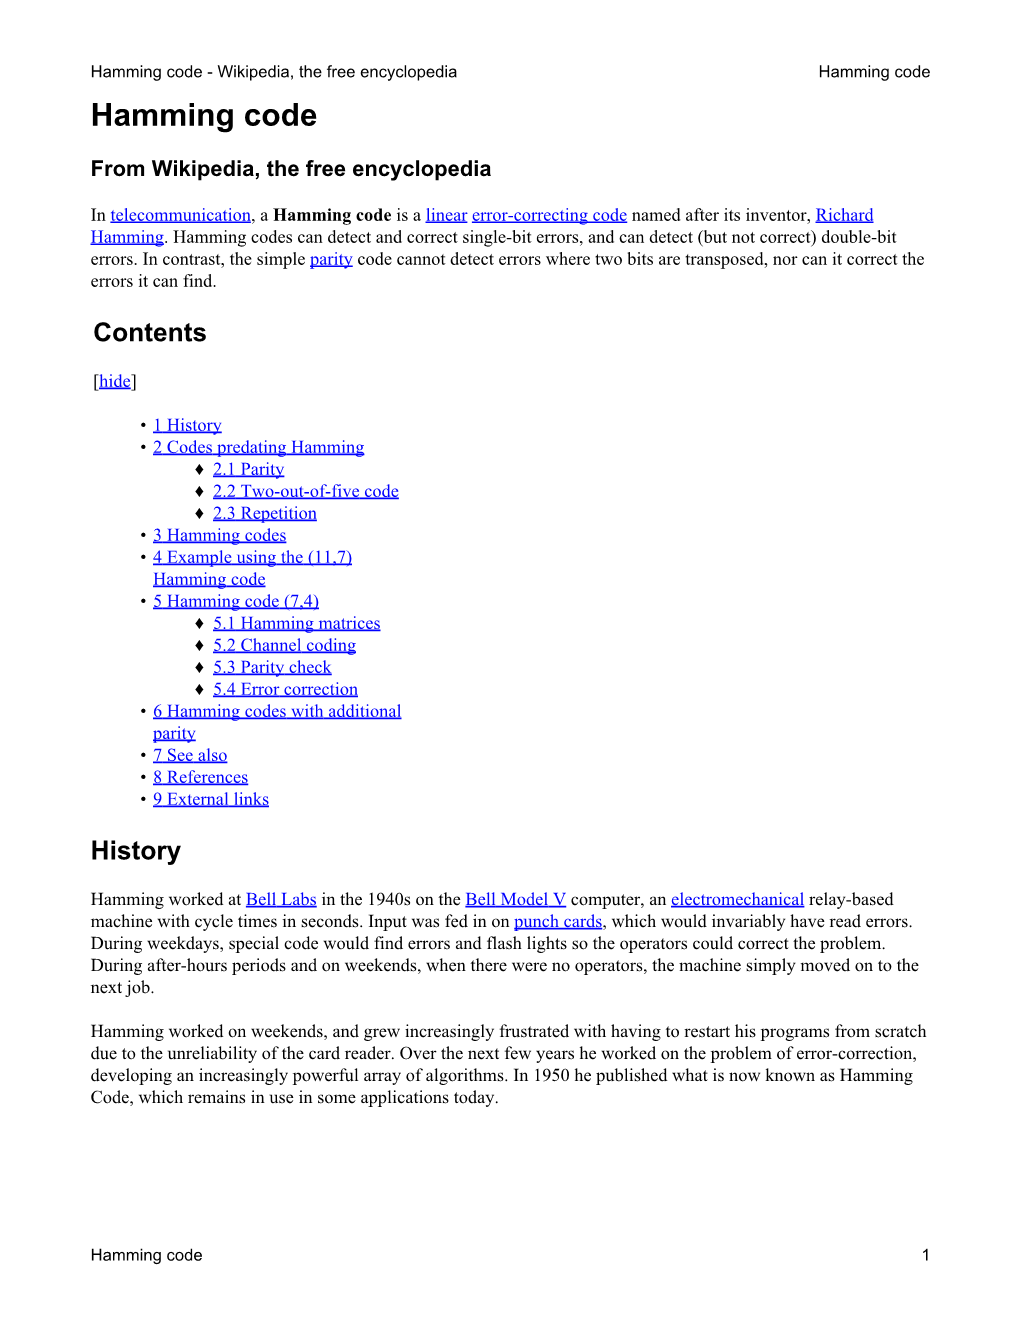 Hamming Code - Wikipedia, the Free Encyclopedia Hamming Code Hamming Code